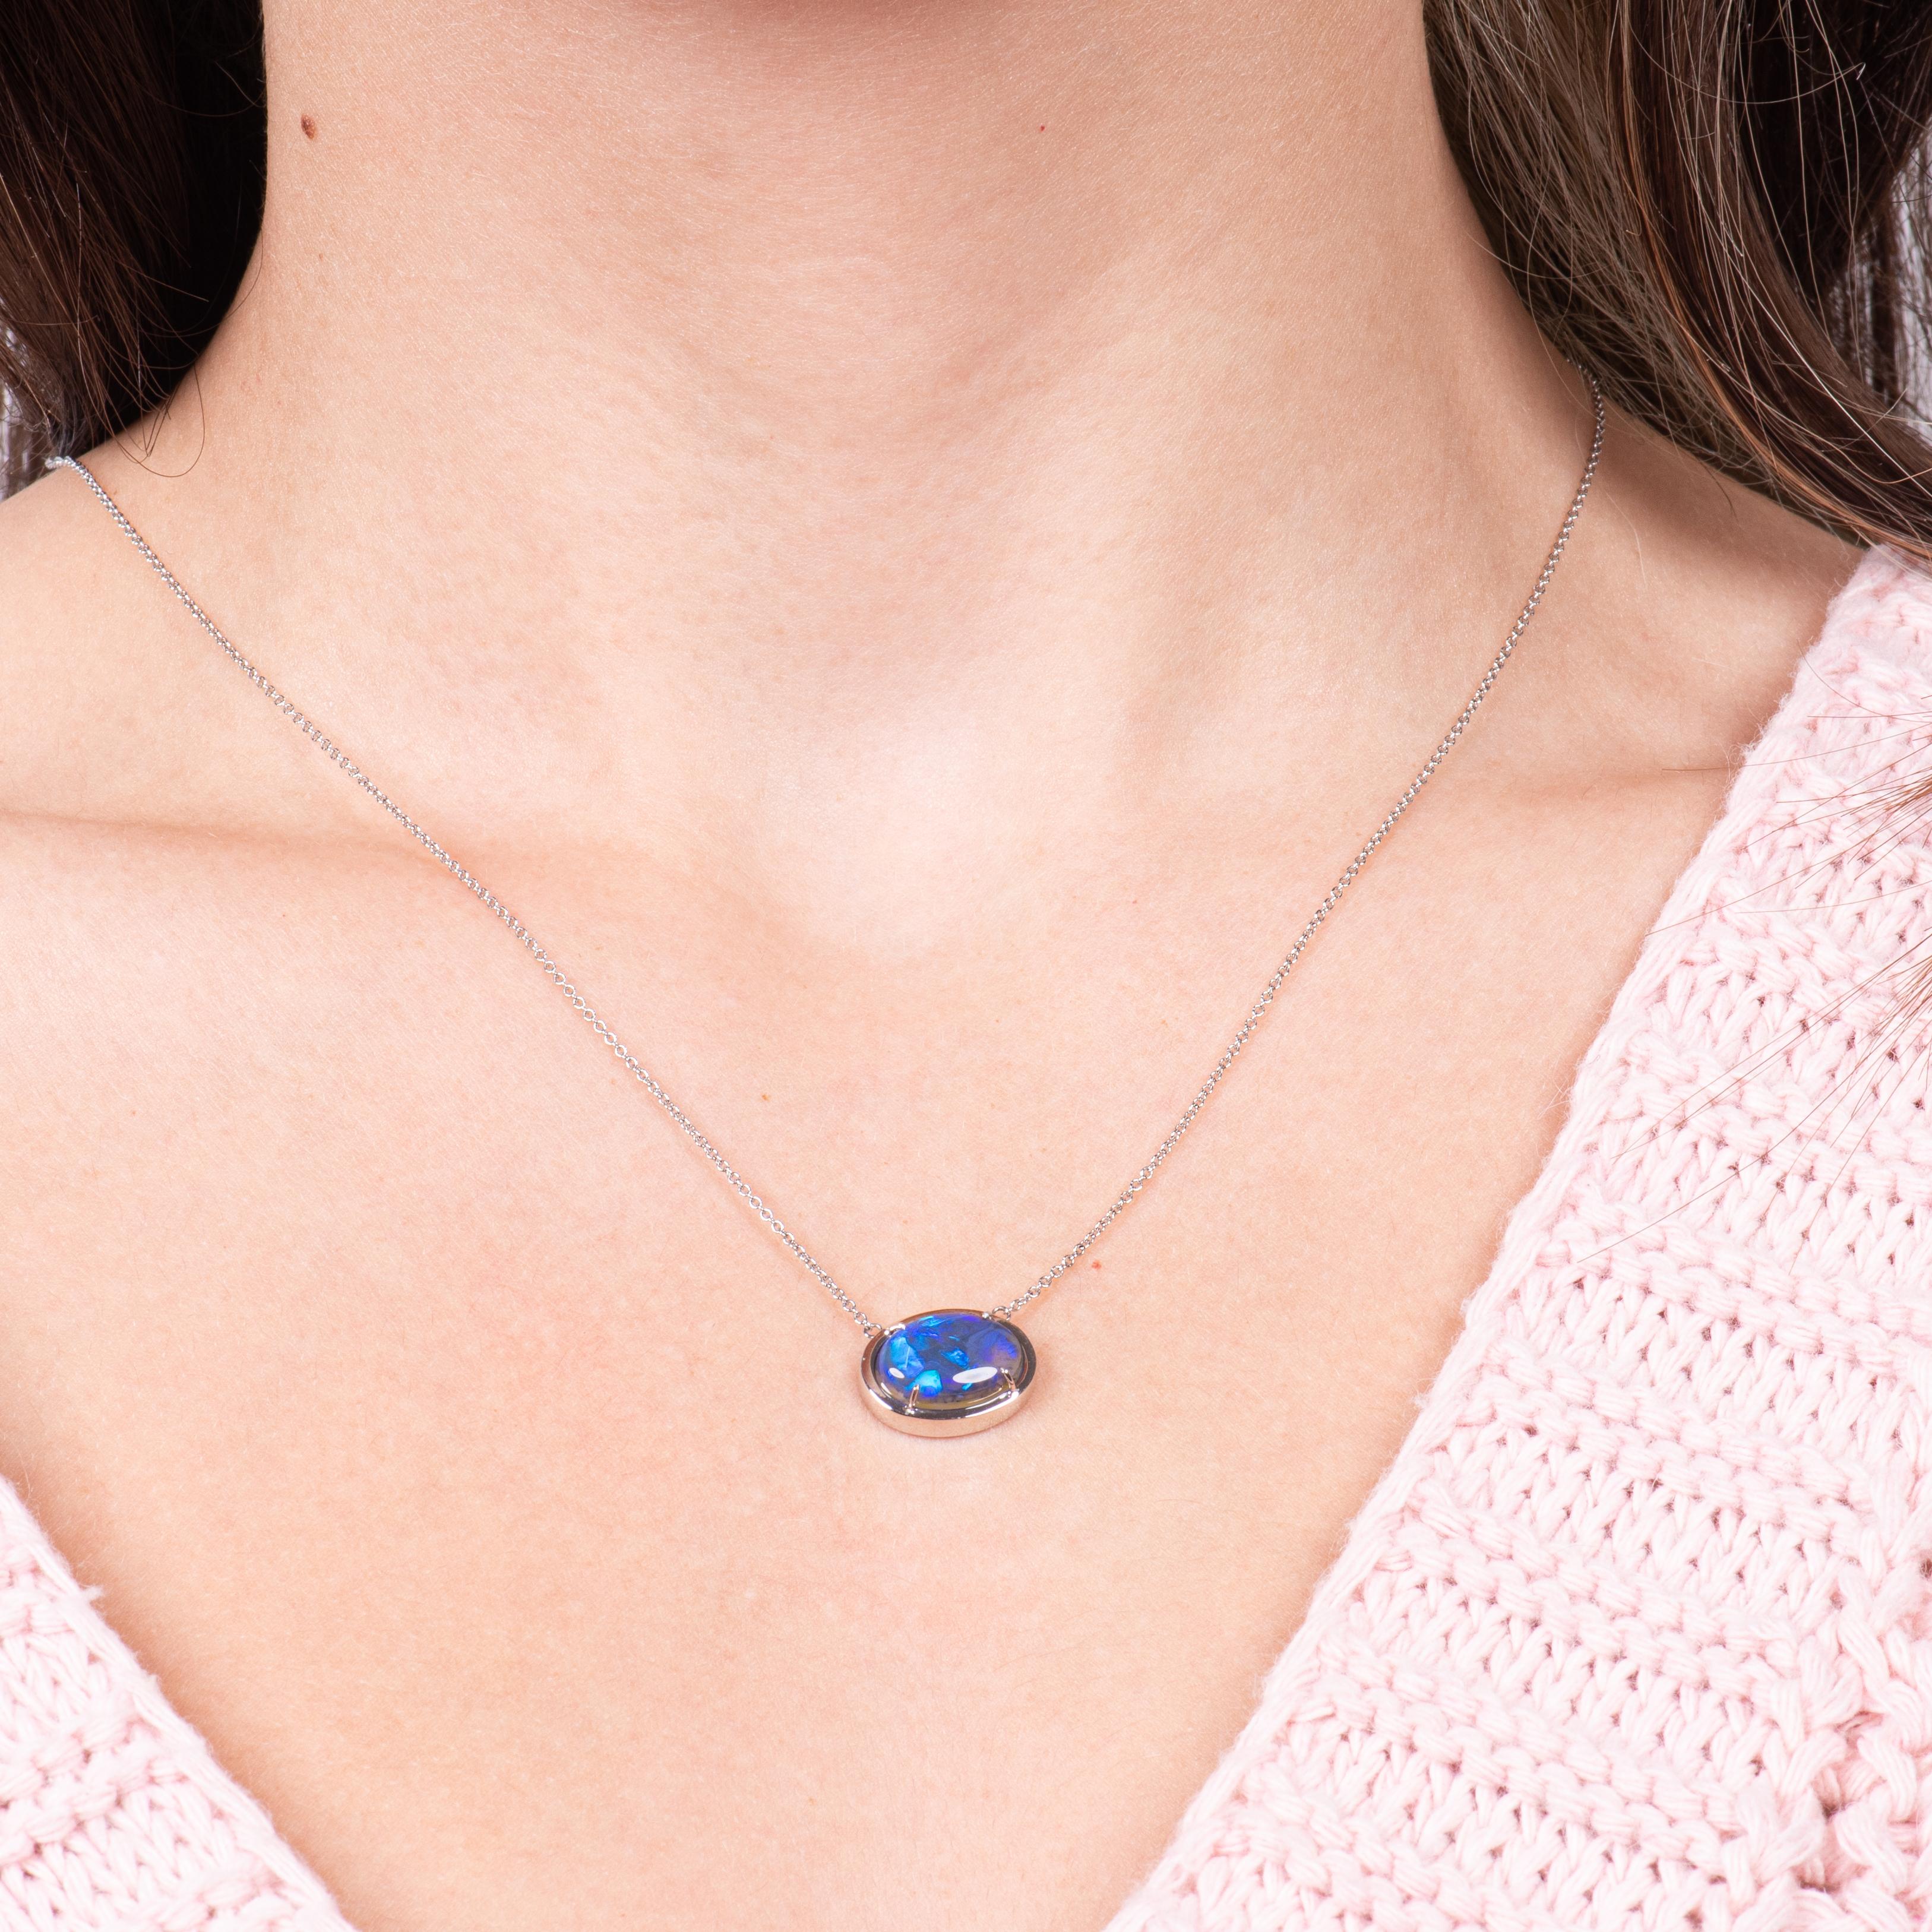 This pendant is a 2.86ct Lightning Ridge Australian blue opal set in an 18kt white gold pendant.